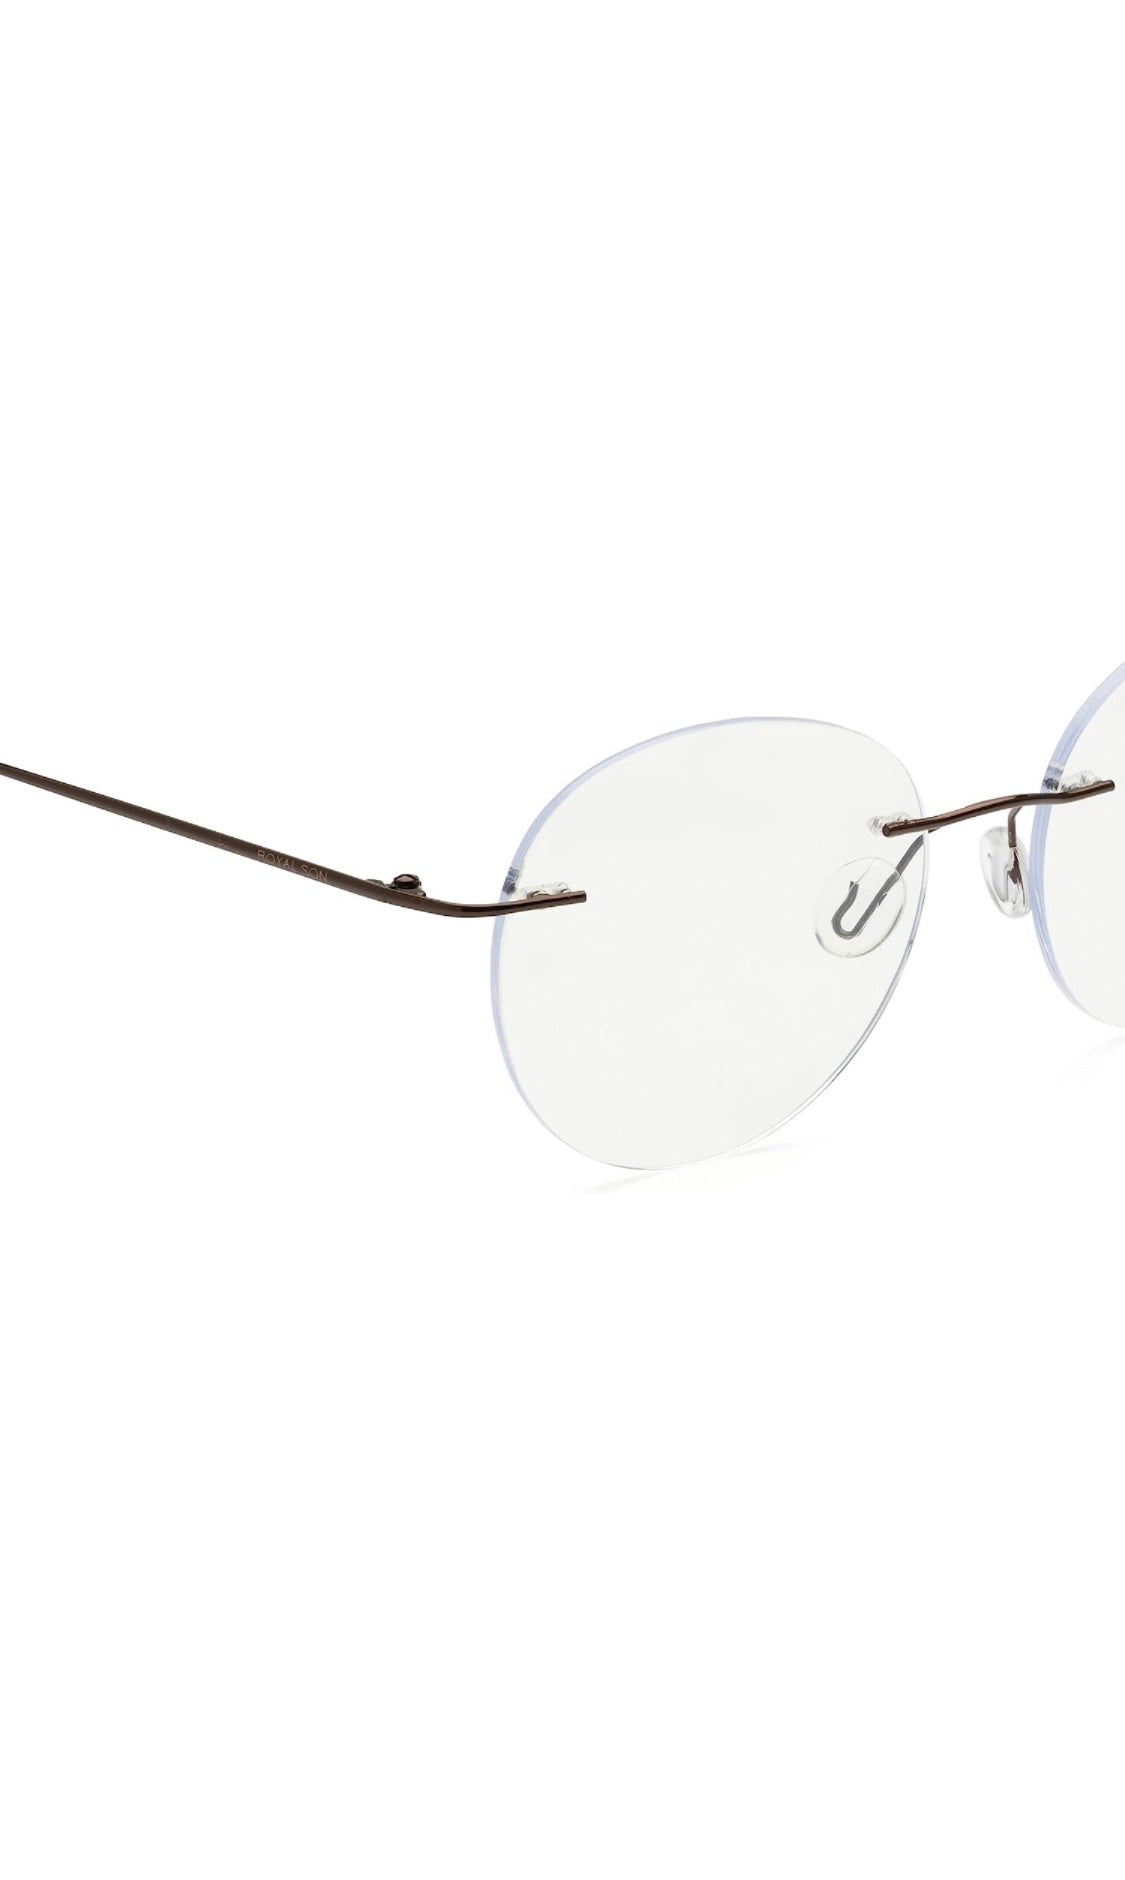 Jodykoes® Rimless Round Frame Zero Power Anti Glare Spectacle For Men and Women | Unisex Computer Eyeglasses Light Weight Round Frameless Eyewear (Copper Brown) - Jodykoes ®